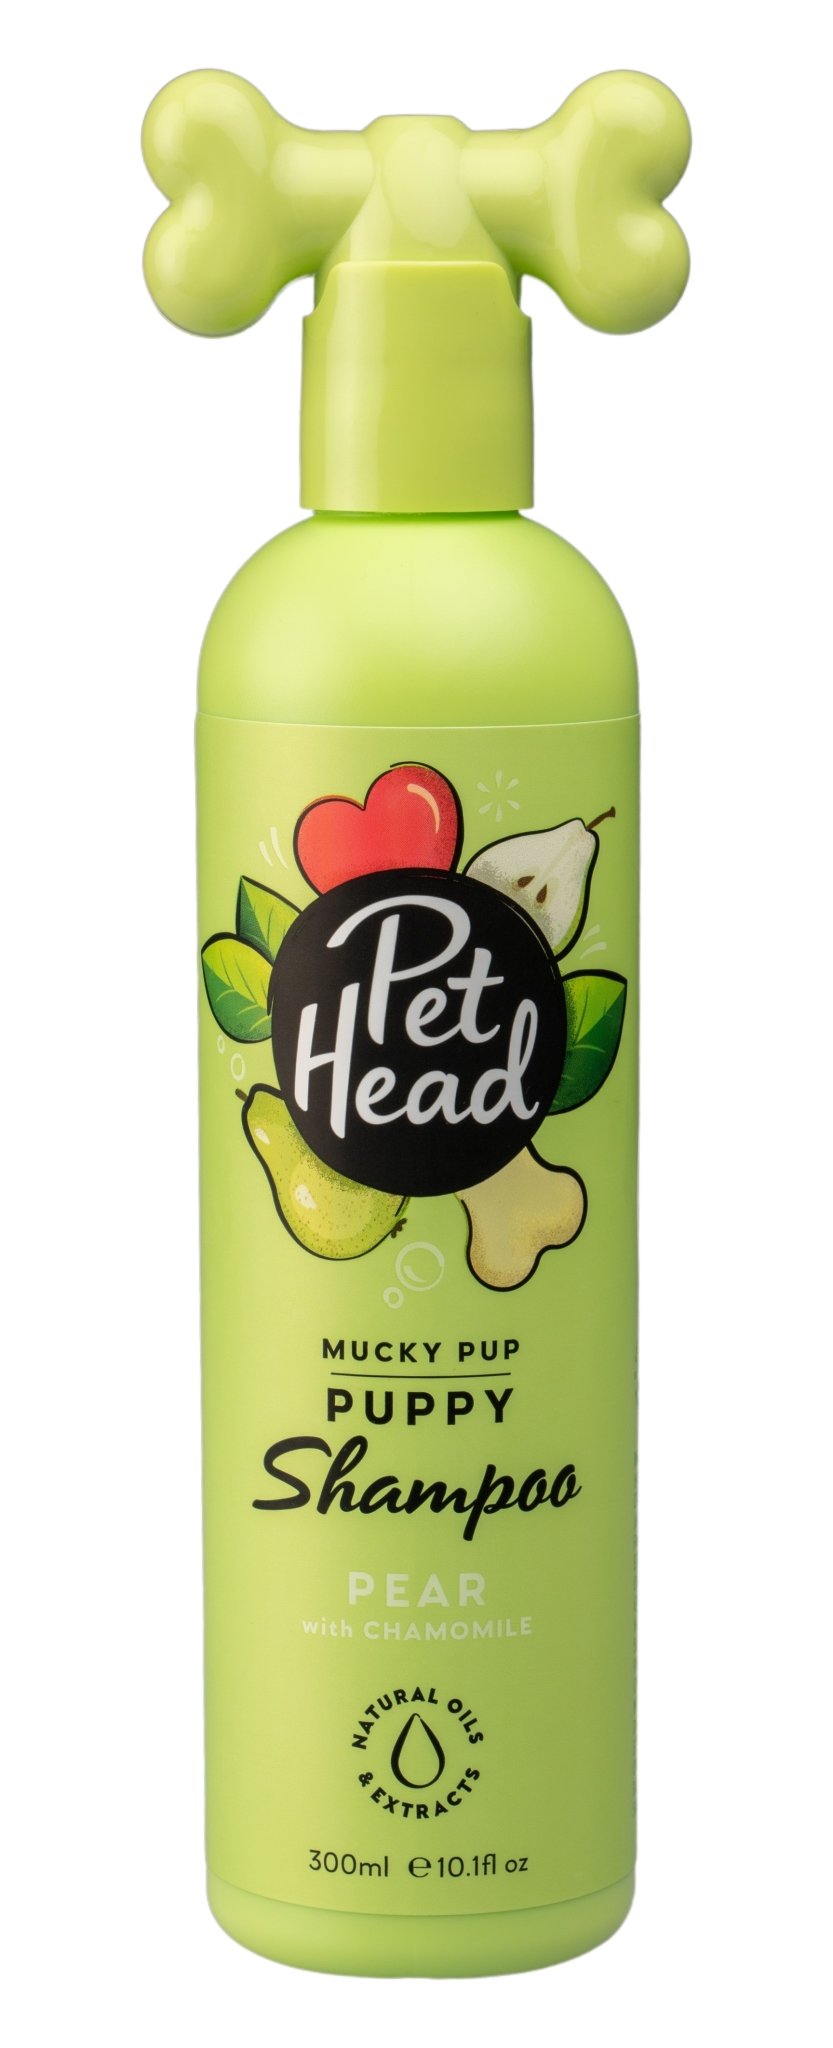 Pet Head Mucky Puppy Shampoo 300ml